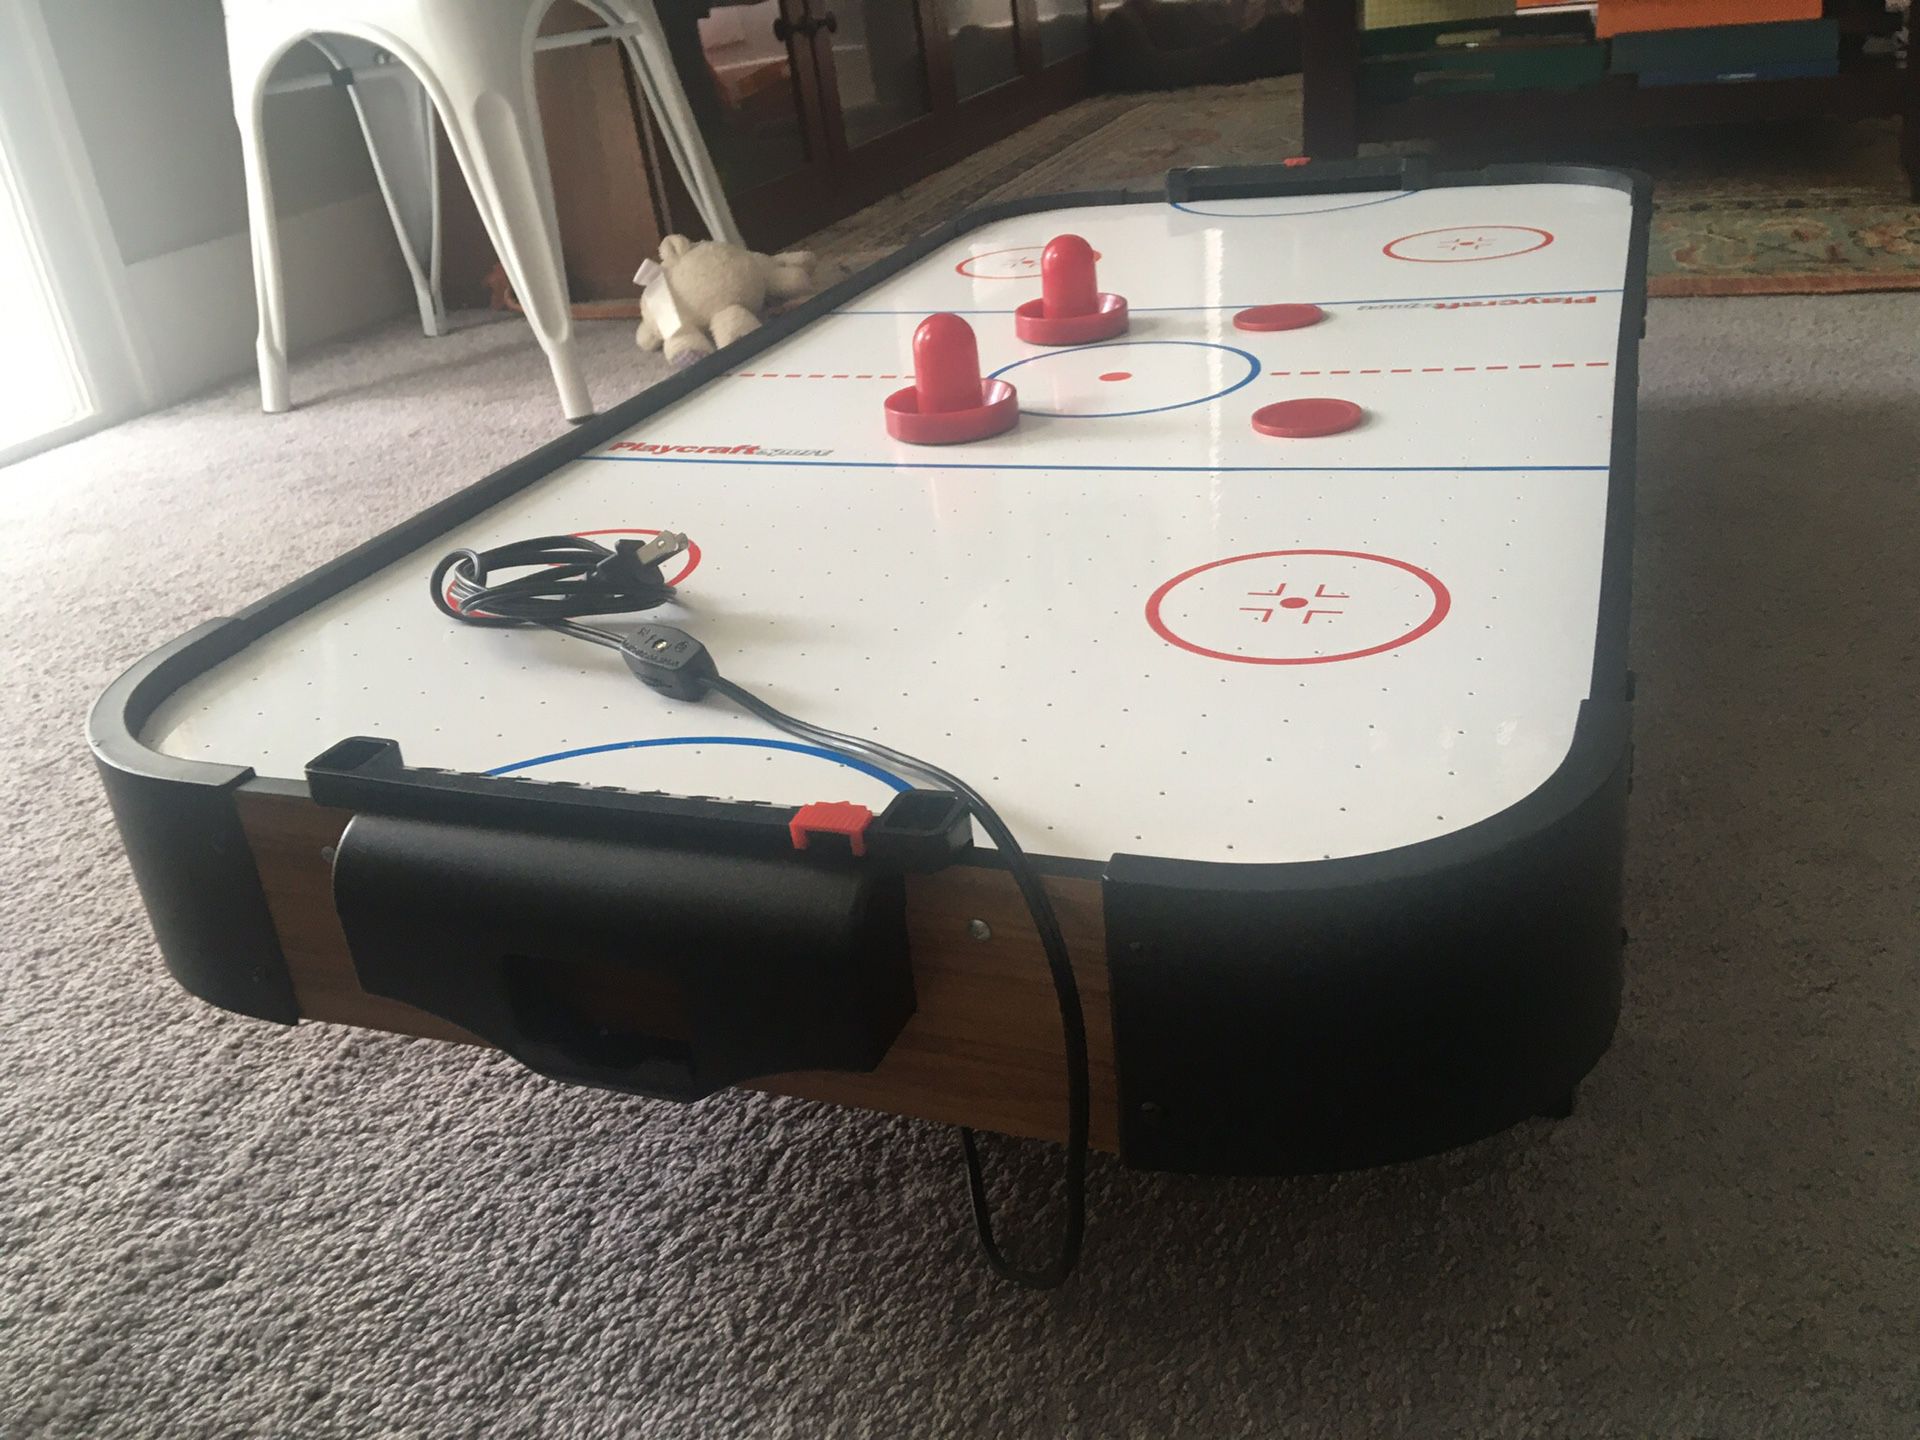 Kid’s air hockey table